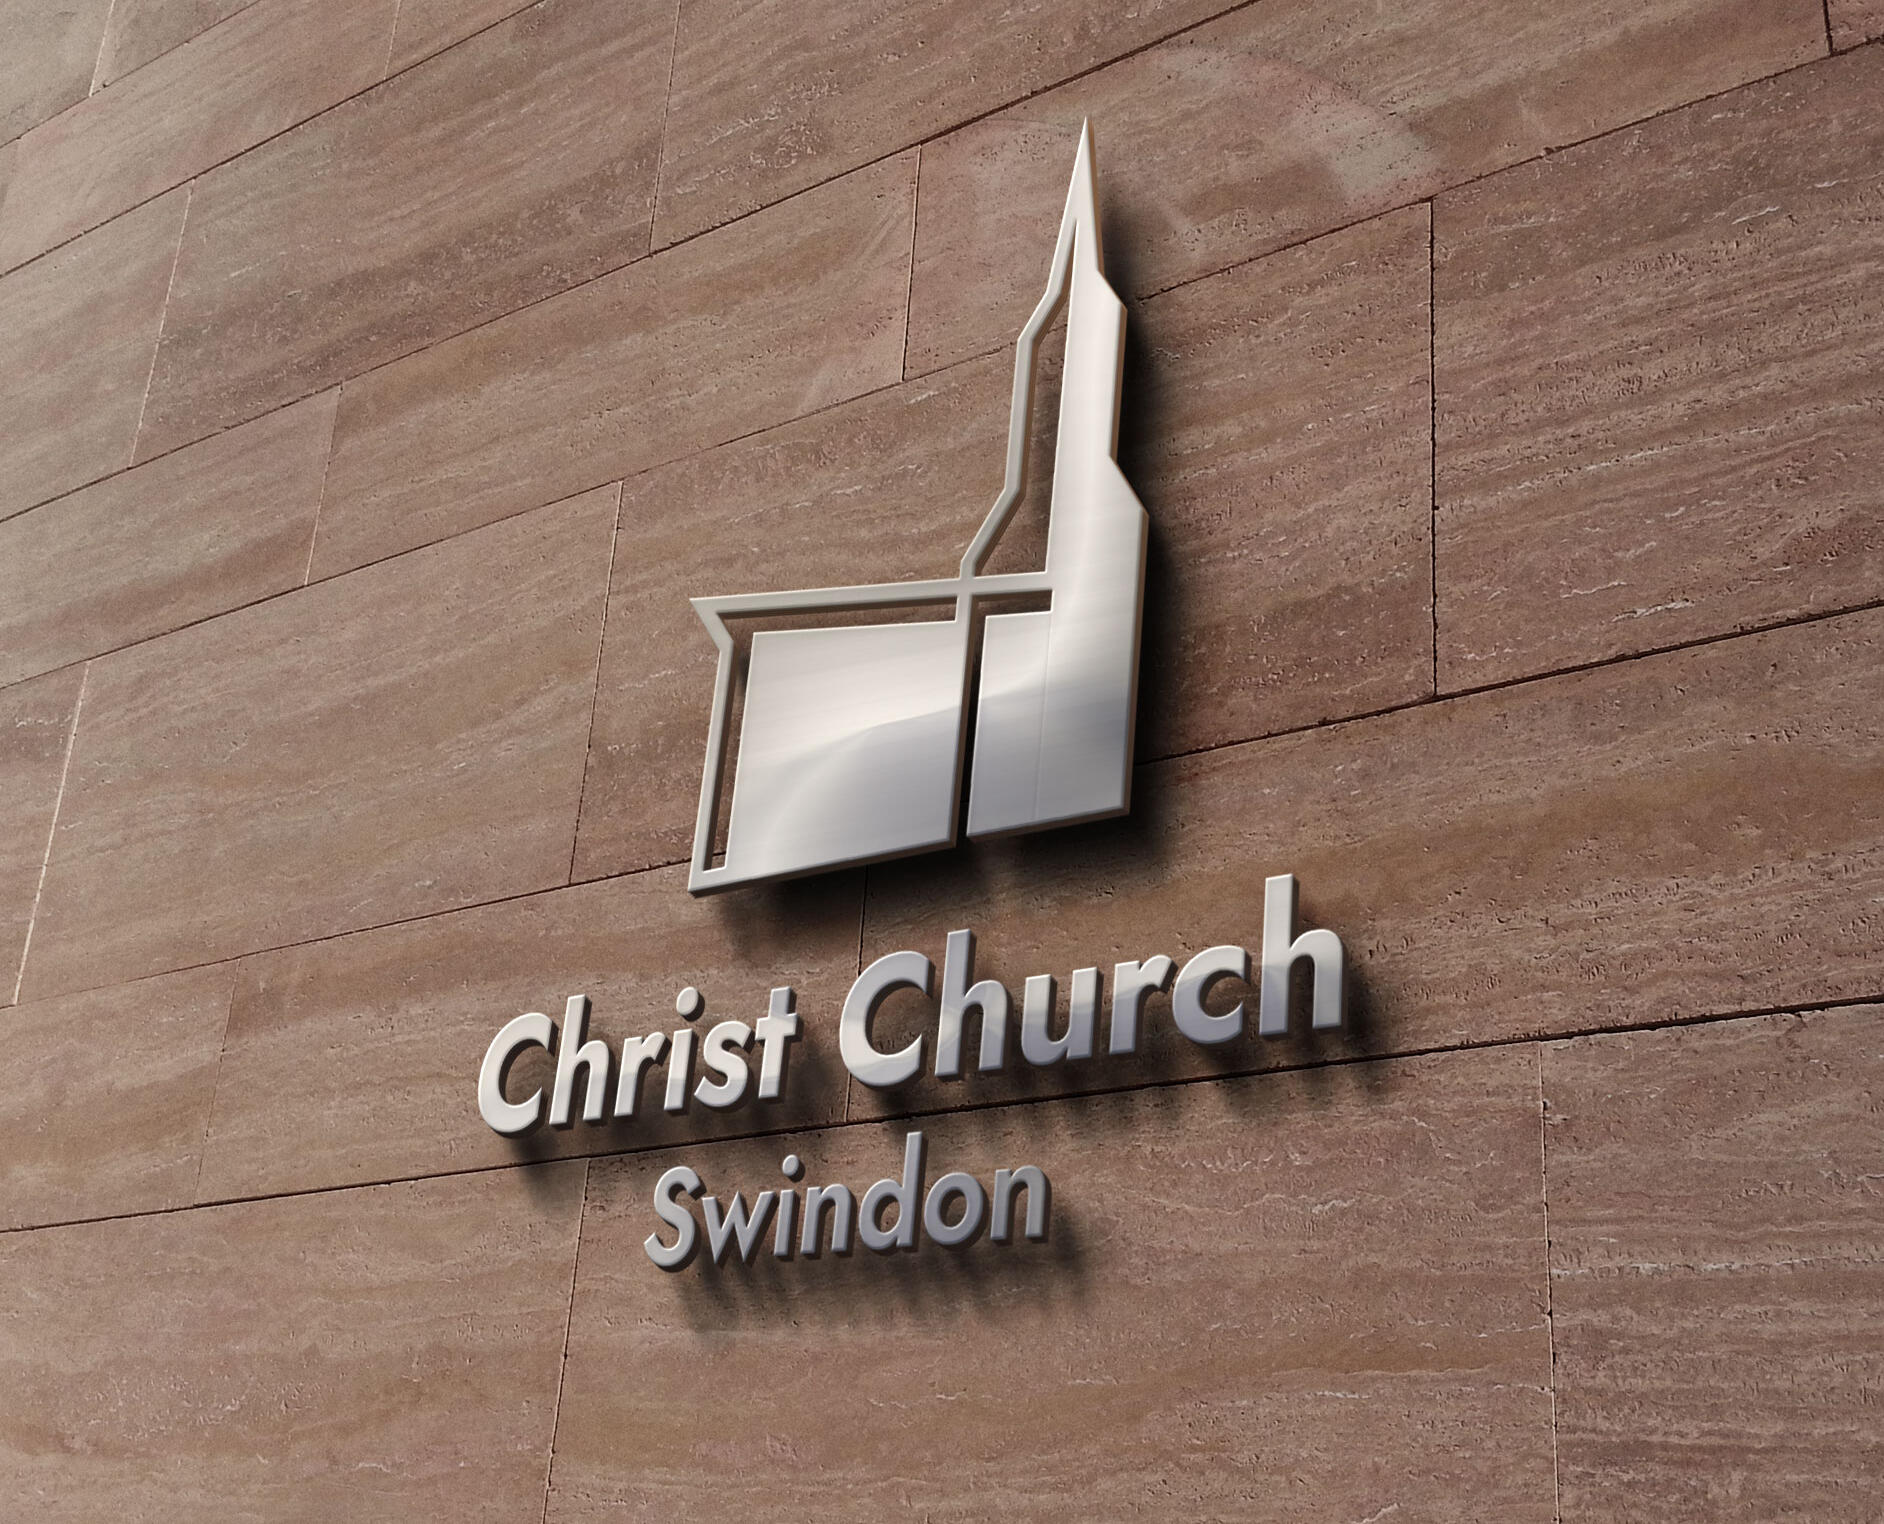 Christ Church Swindon logo on wall